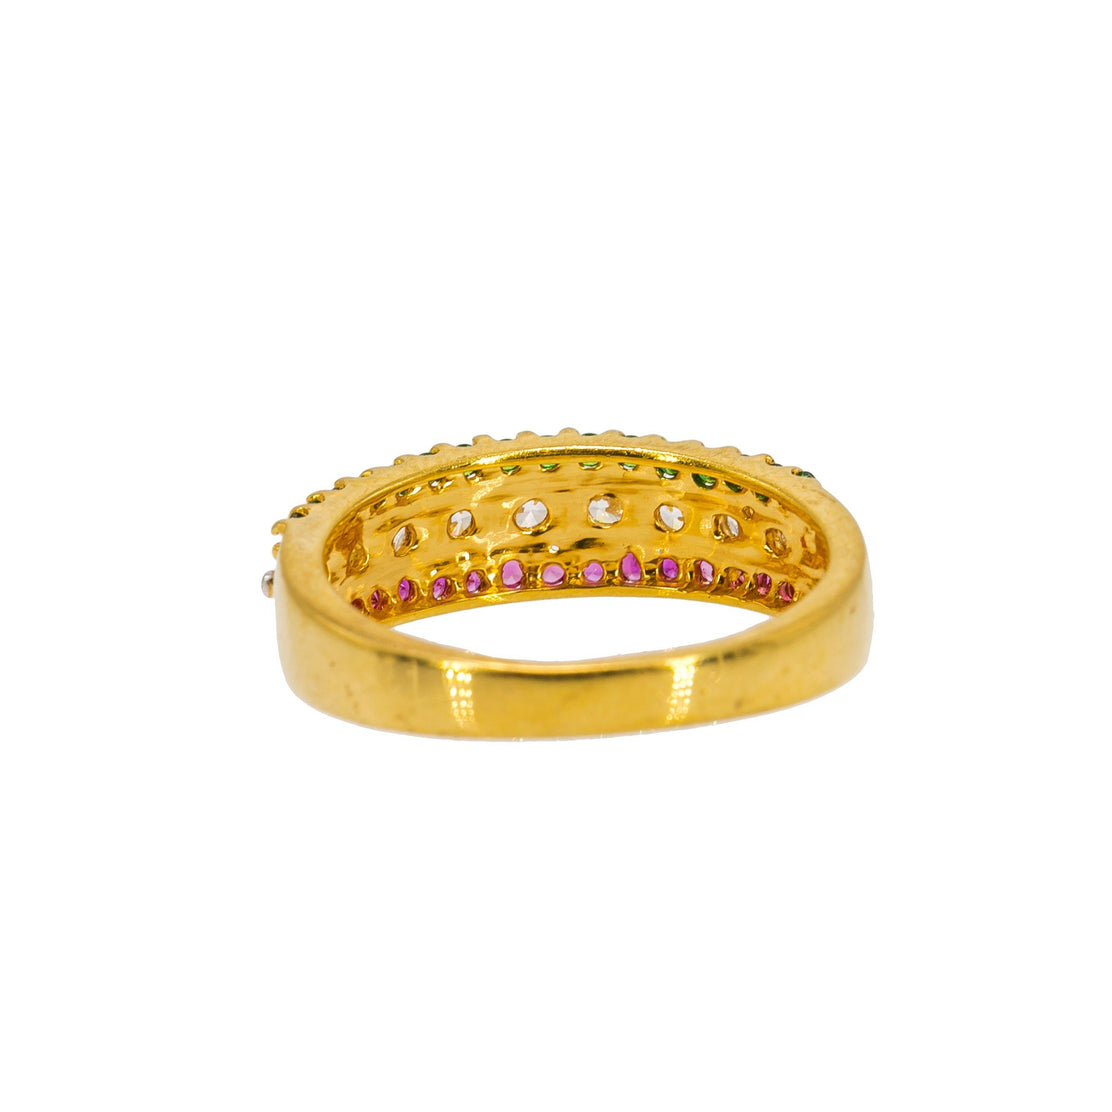 Stunning Solid 22 KT Gold Ring for Men